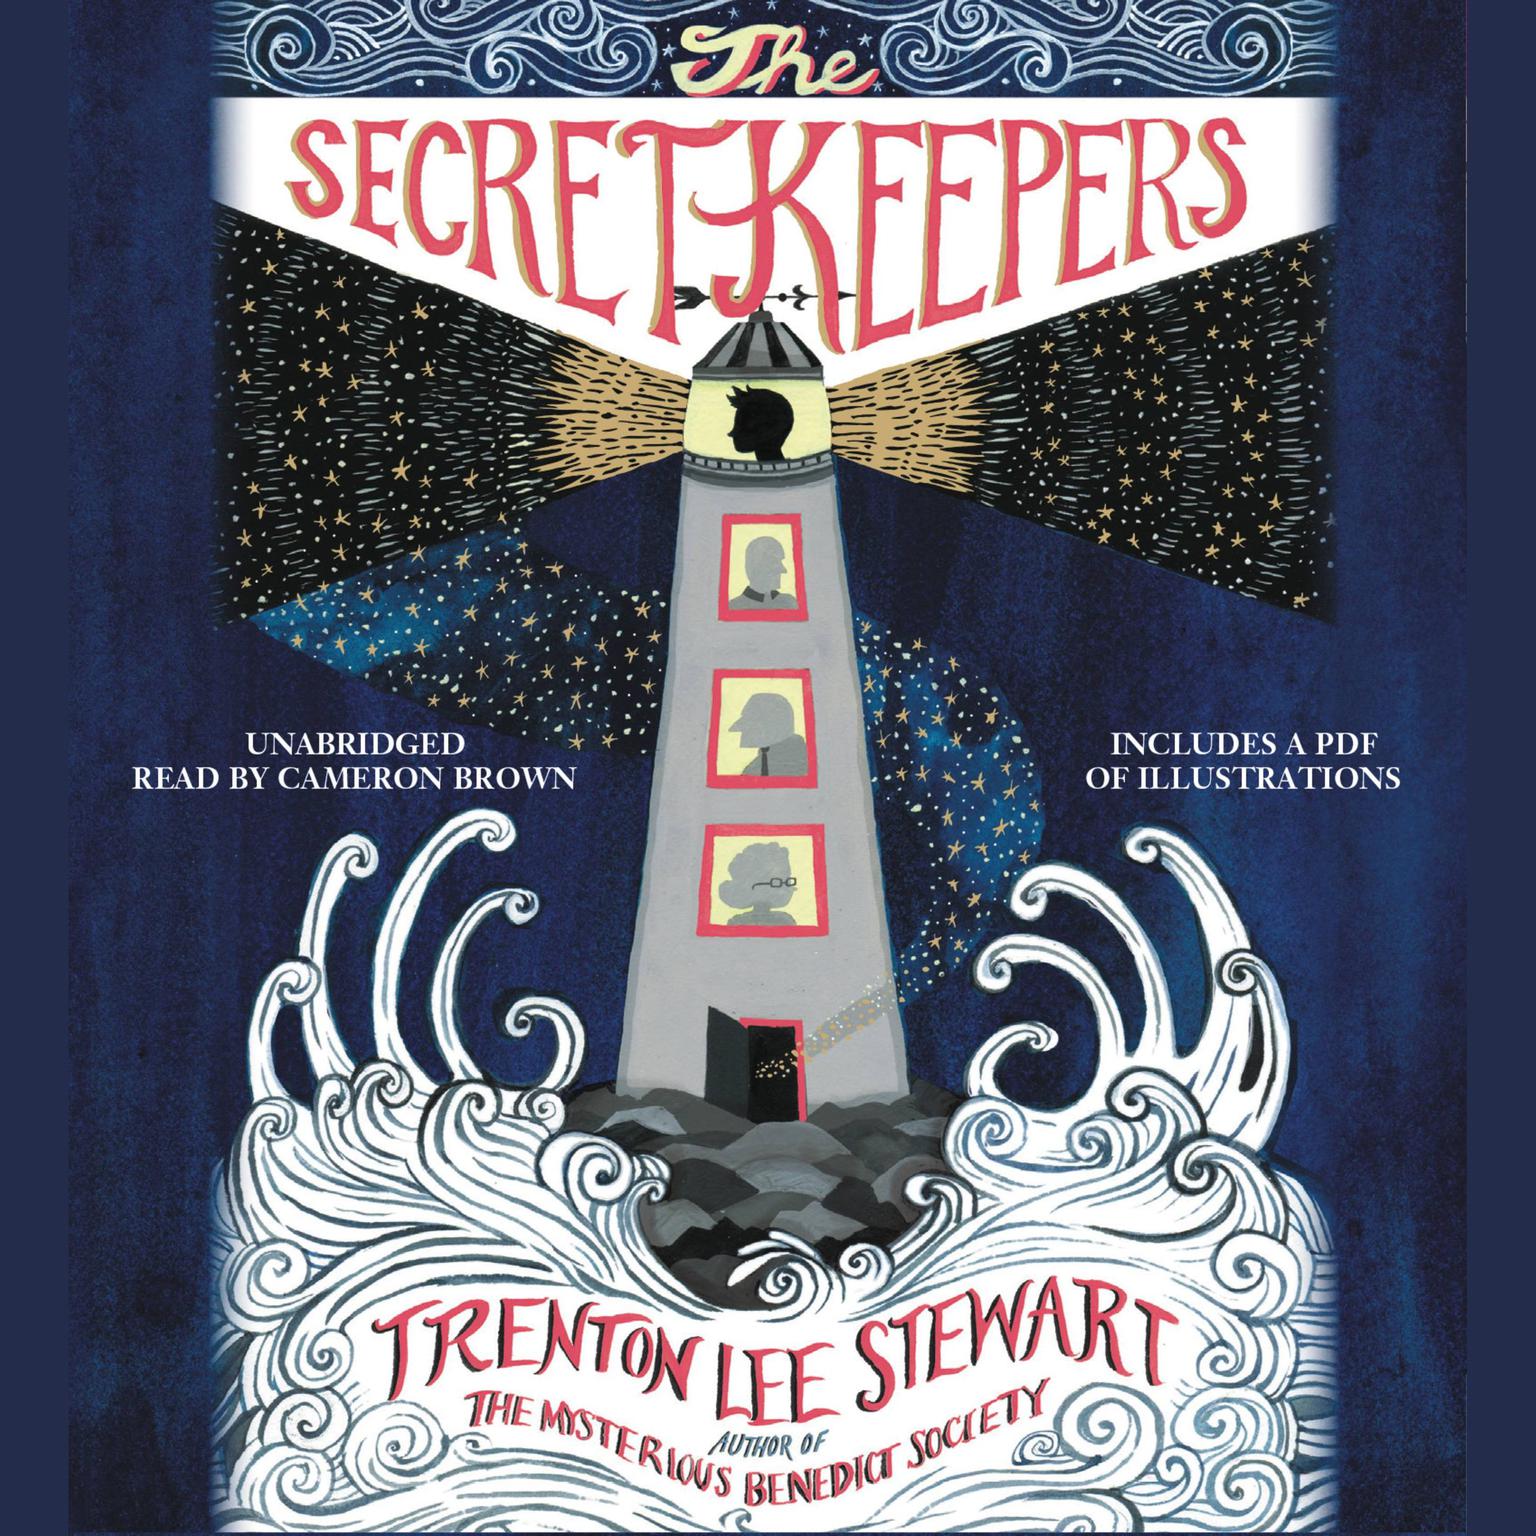 The Secret Keepers Audiobook by Trenton Lee Stewart — Download Now